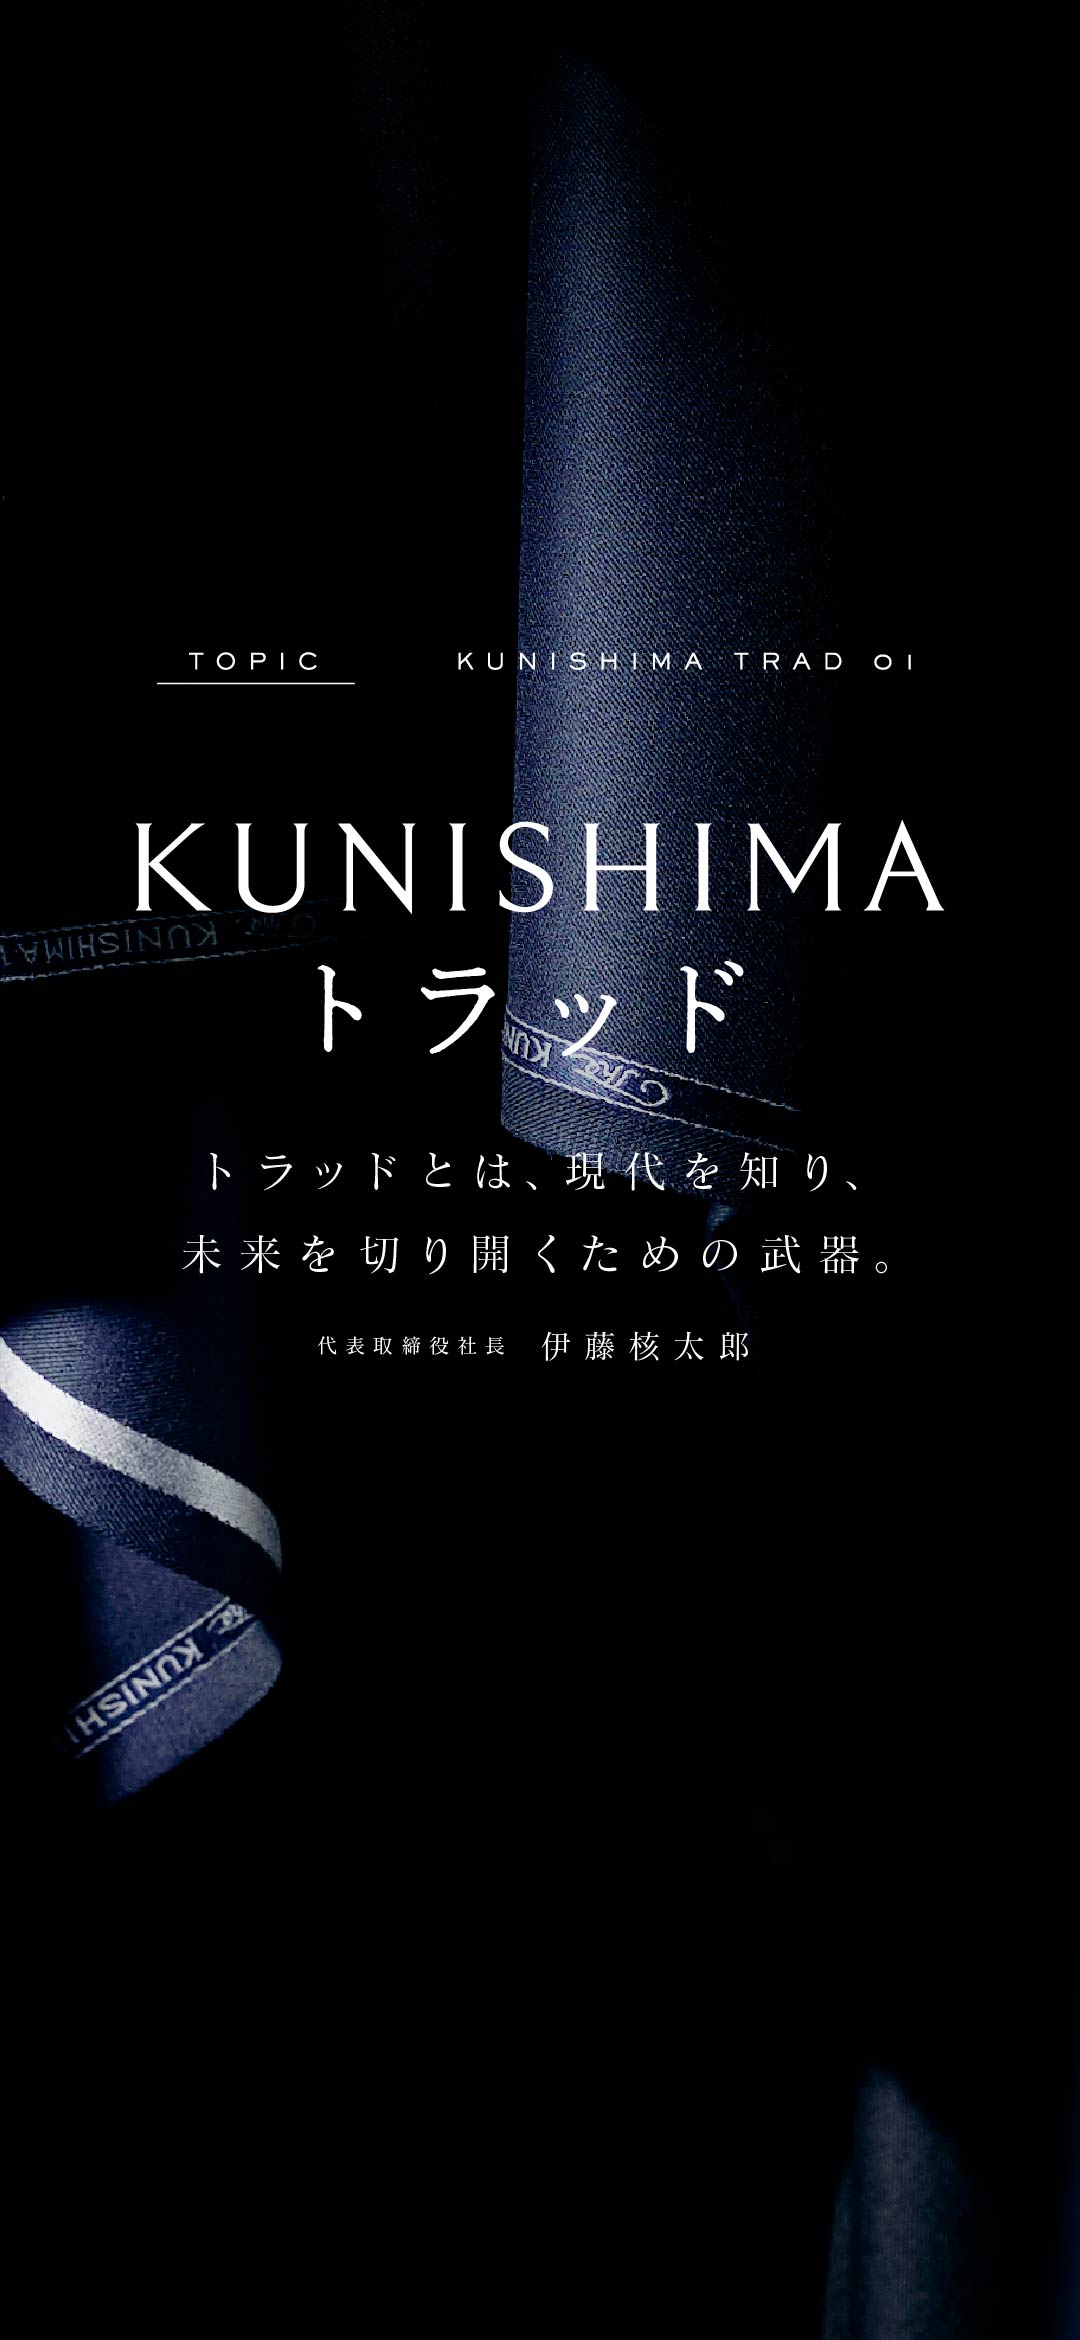 TOPIC KUNISHIMAトラッド 01